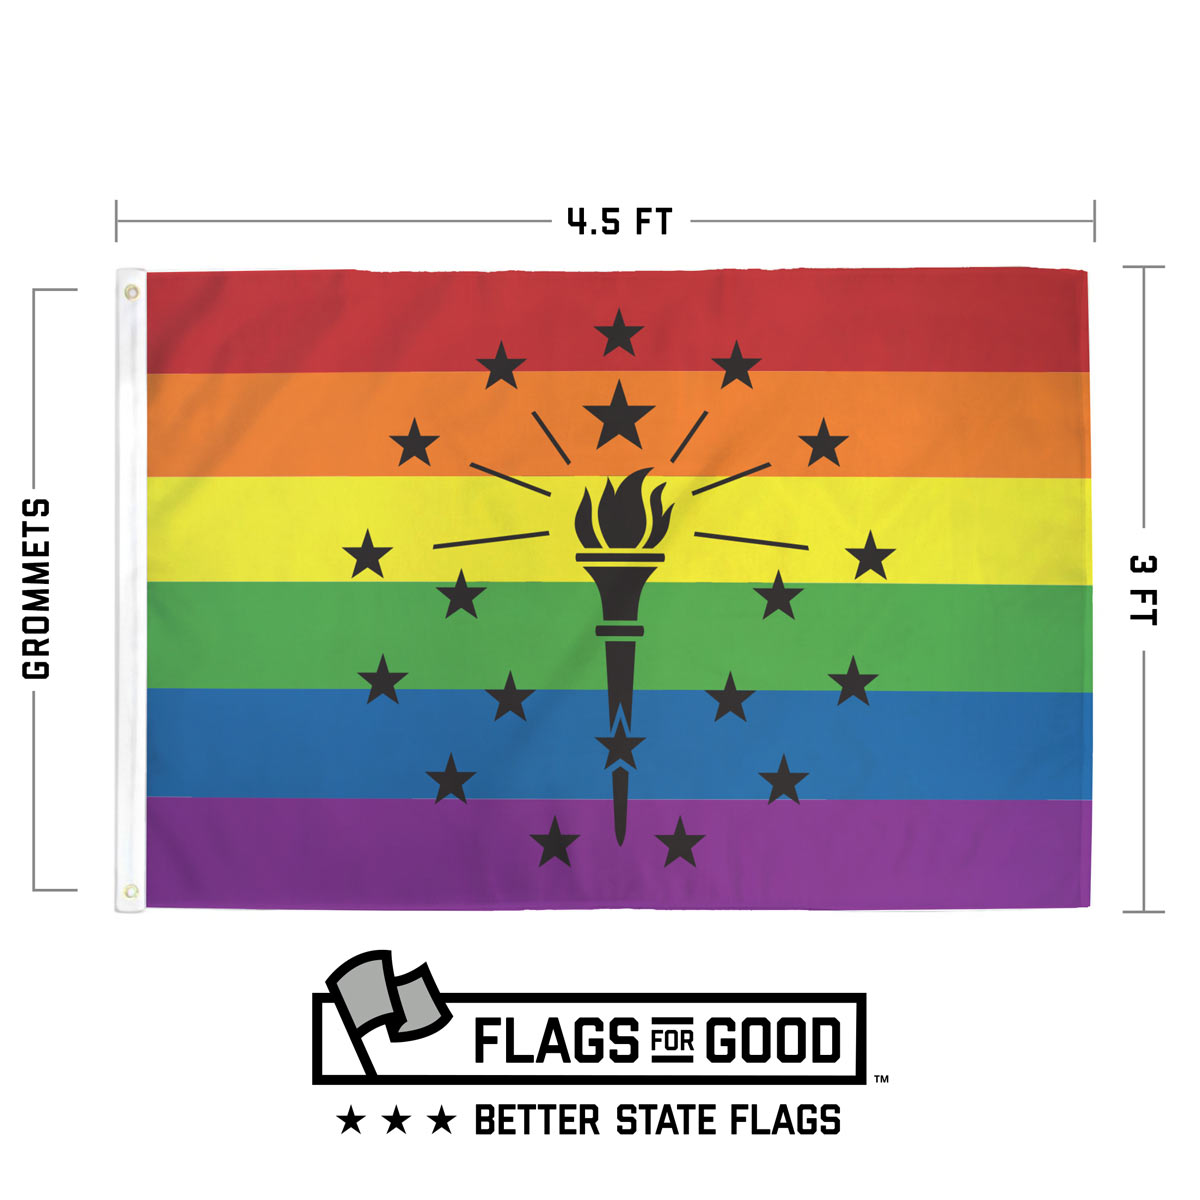 Indiana Rainbow Pride flag measuring 3 by 4.5 feet